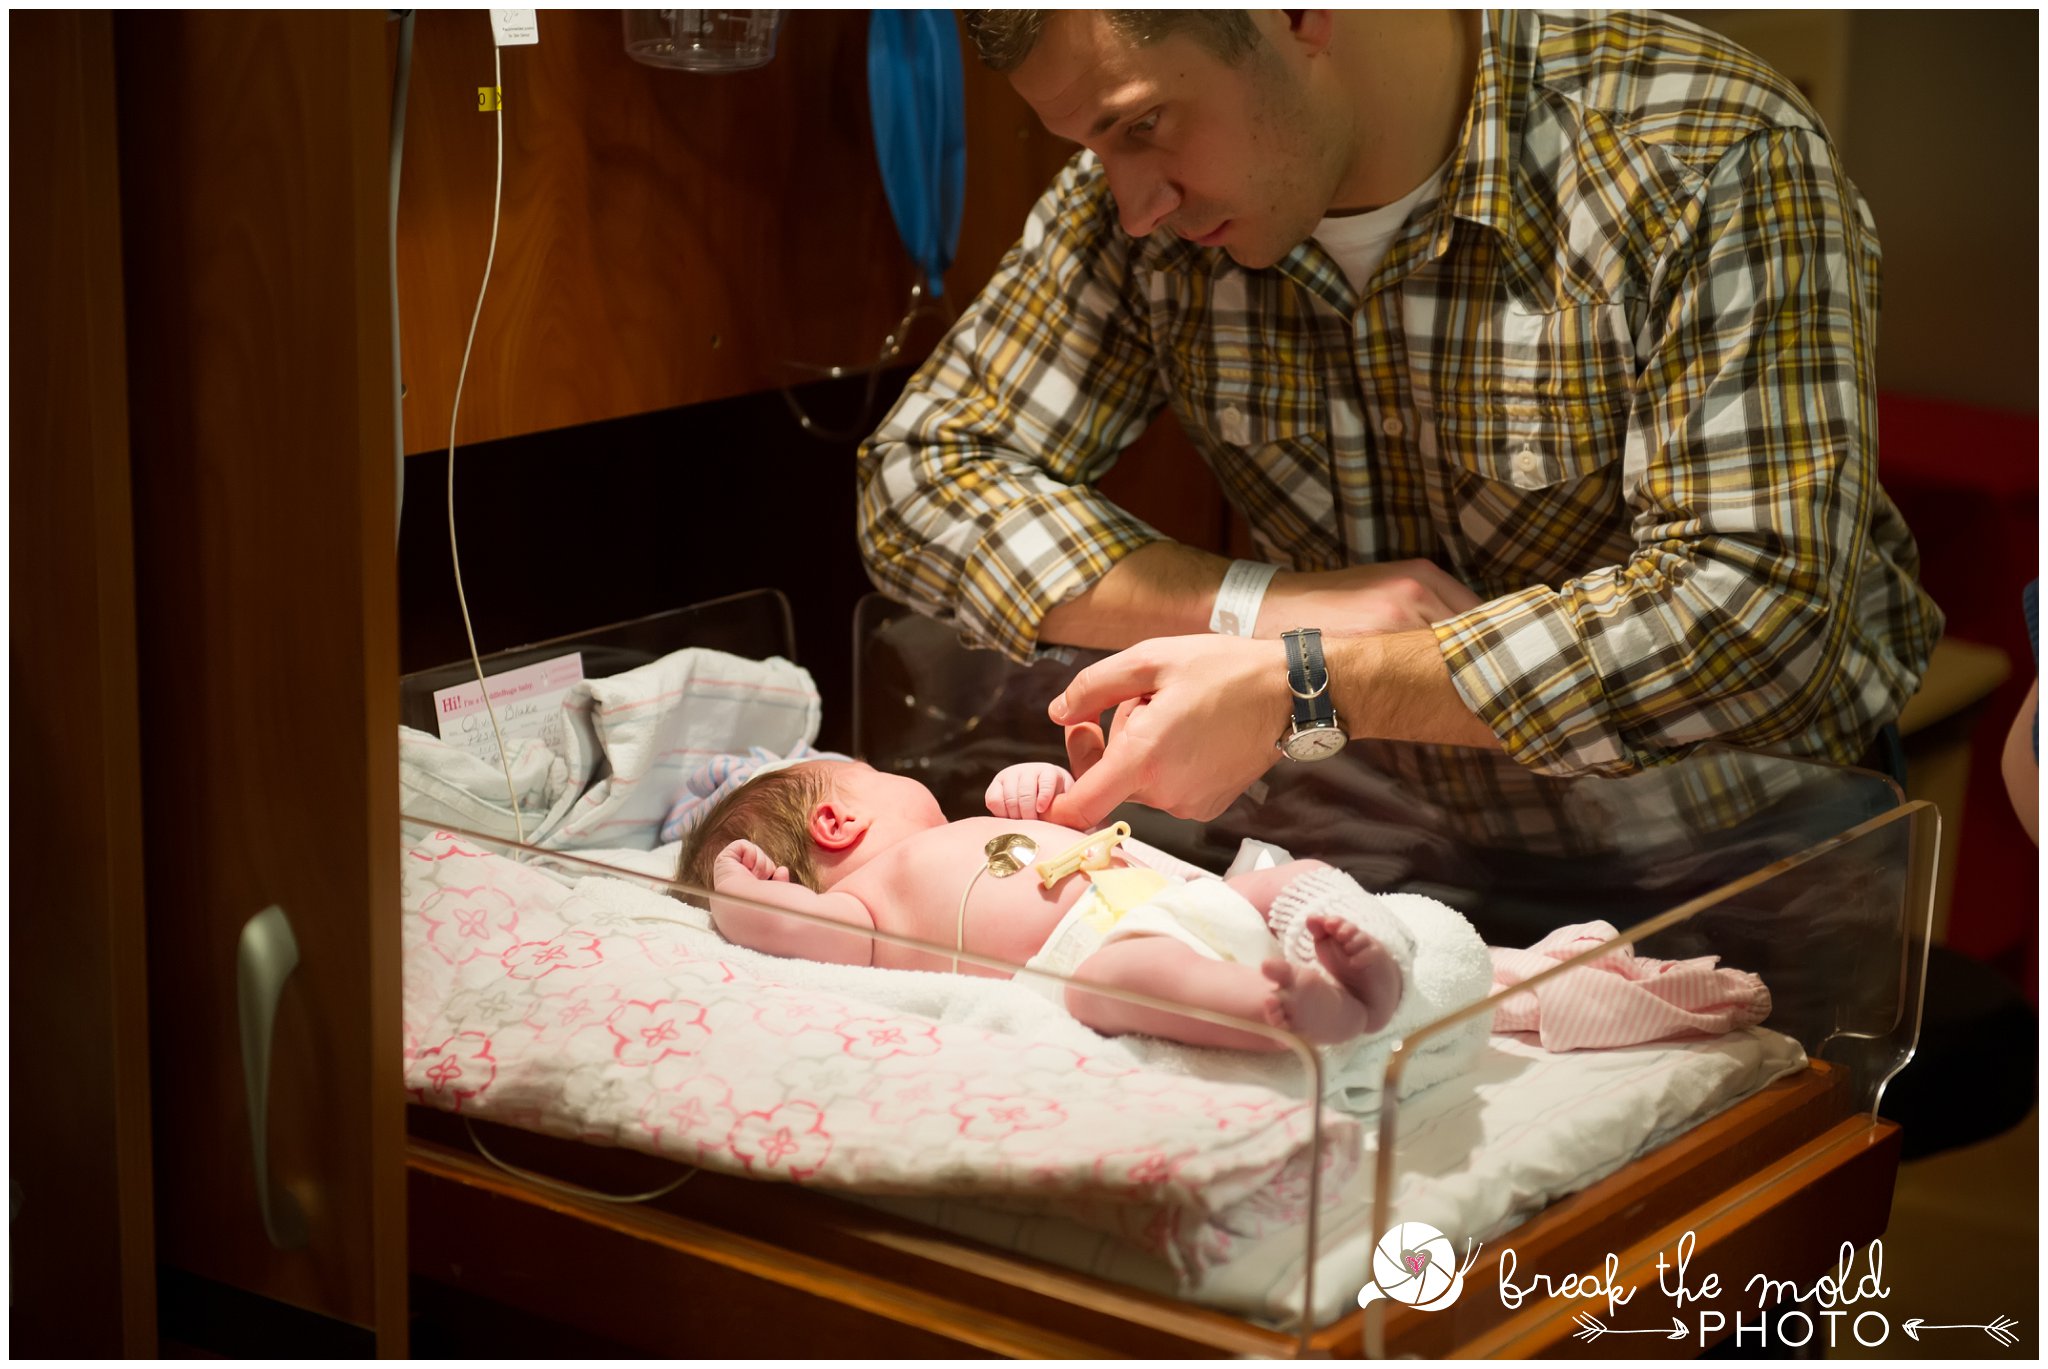 fresh-24-newborn-in-hospital-break-the-mold-photo-baby-girl-sweet-in-room-photos (12).jpg